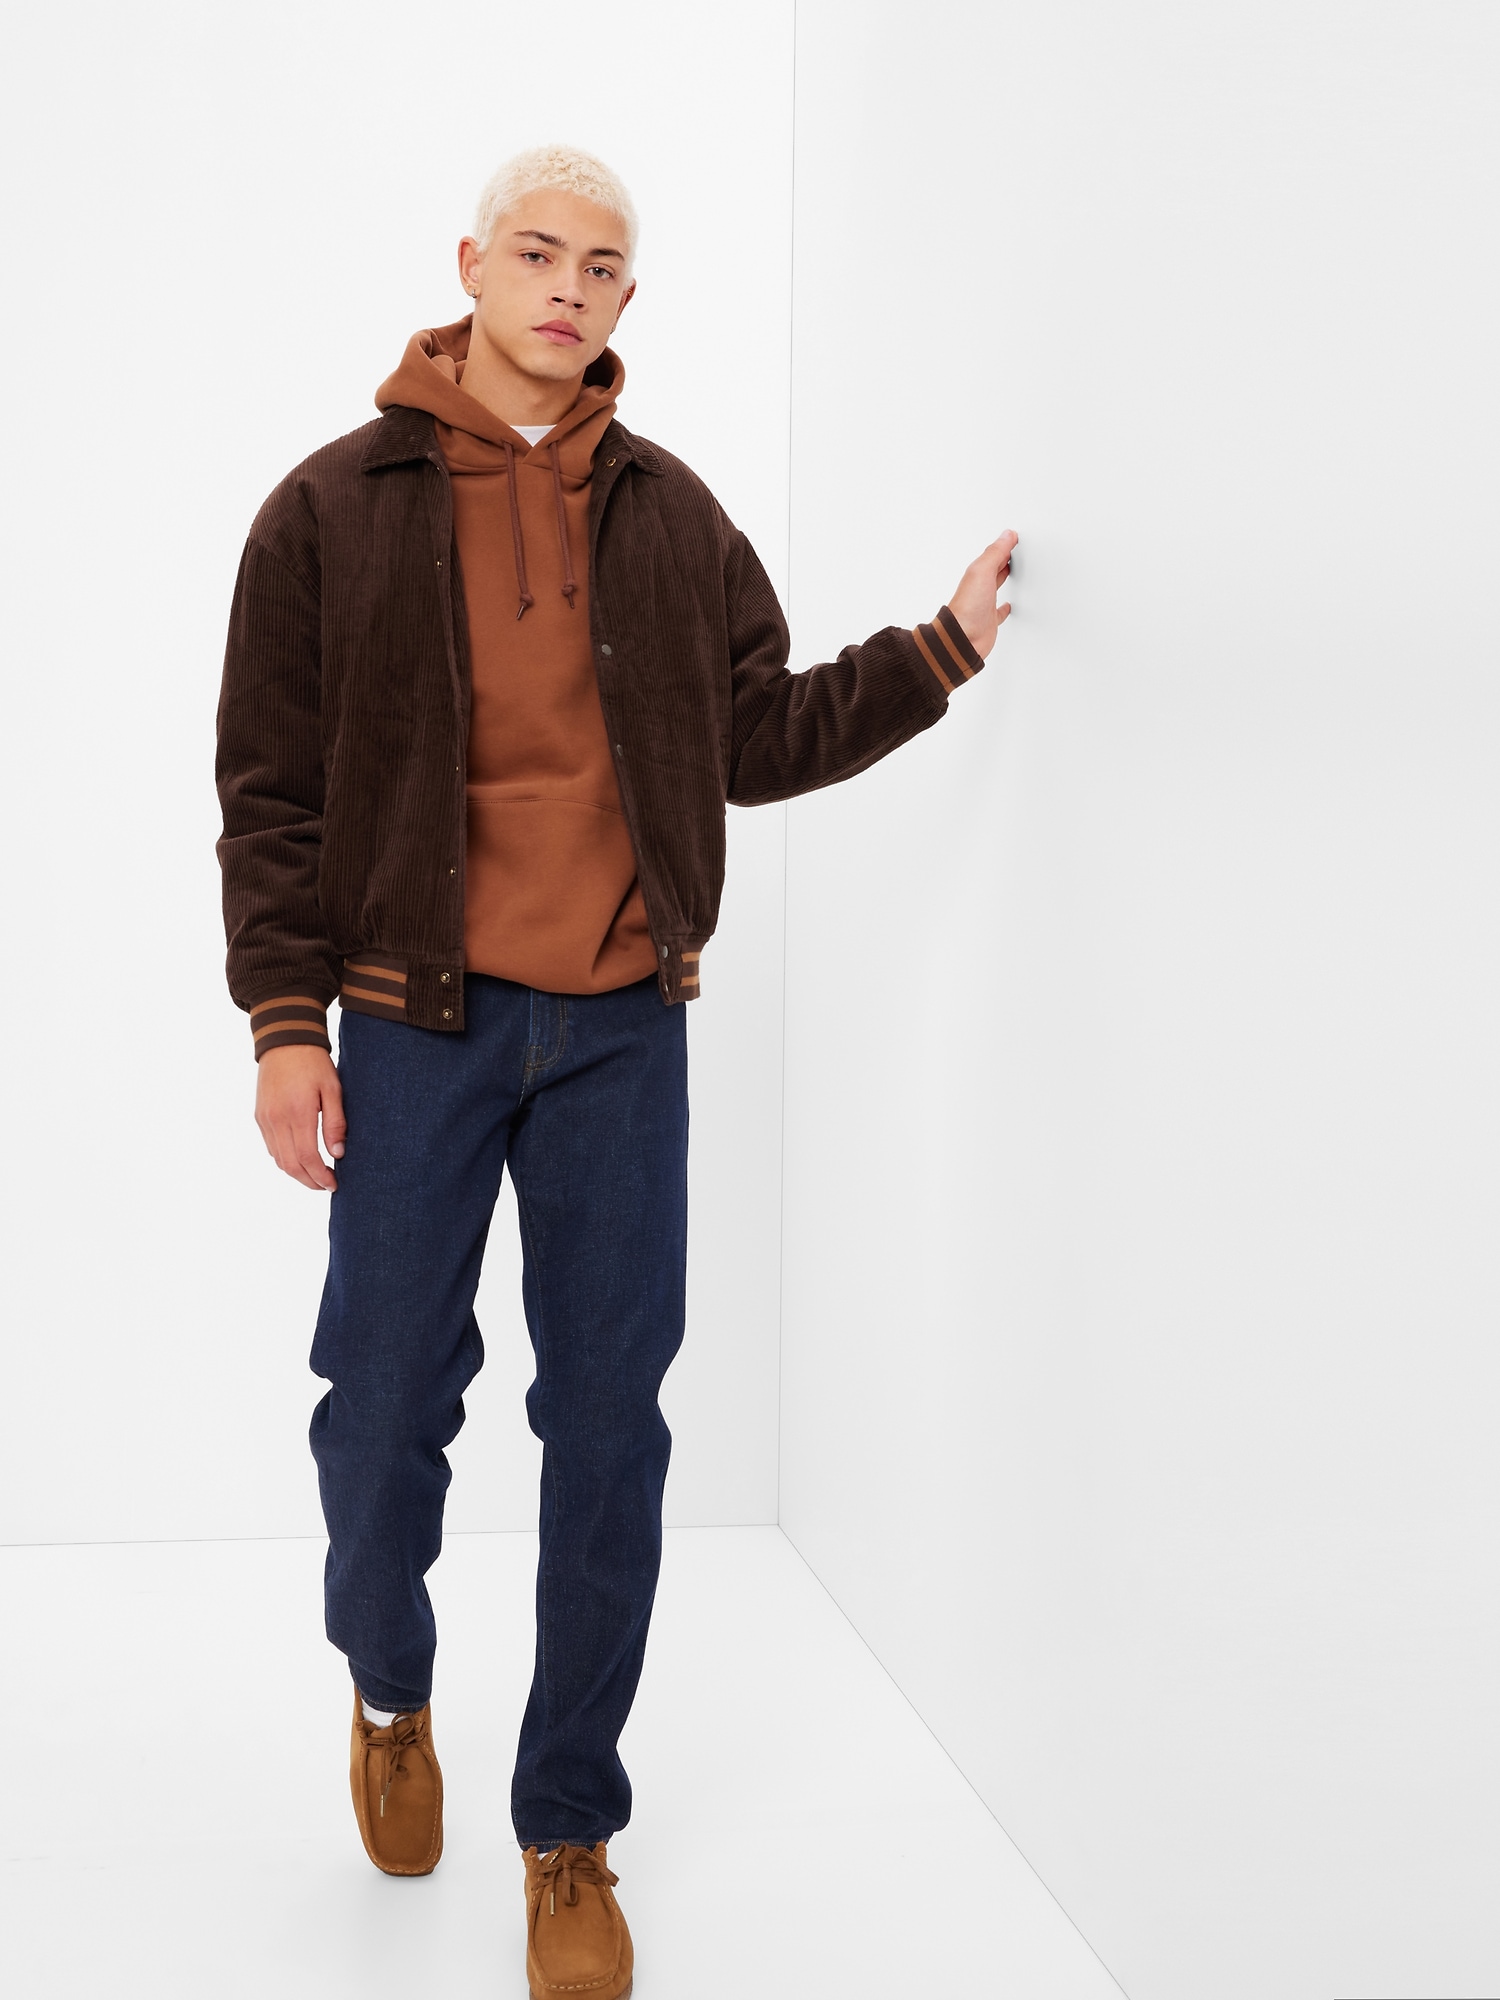 New Gap Softwear Brown Slim Jeans 29x30 - clothing & accessories